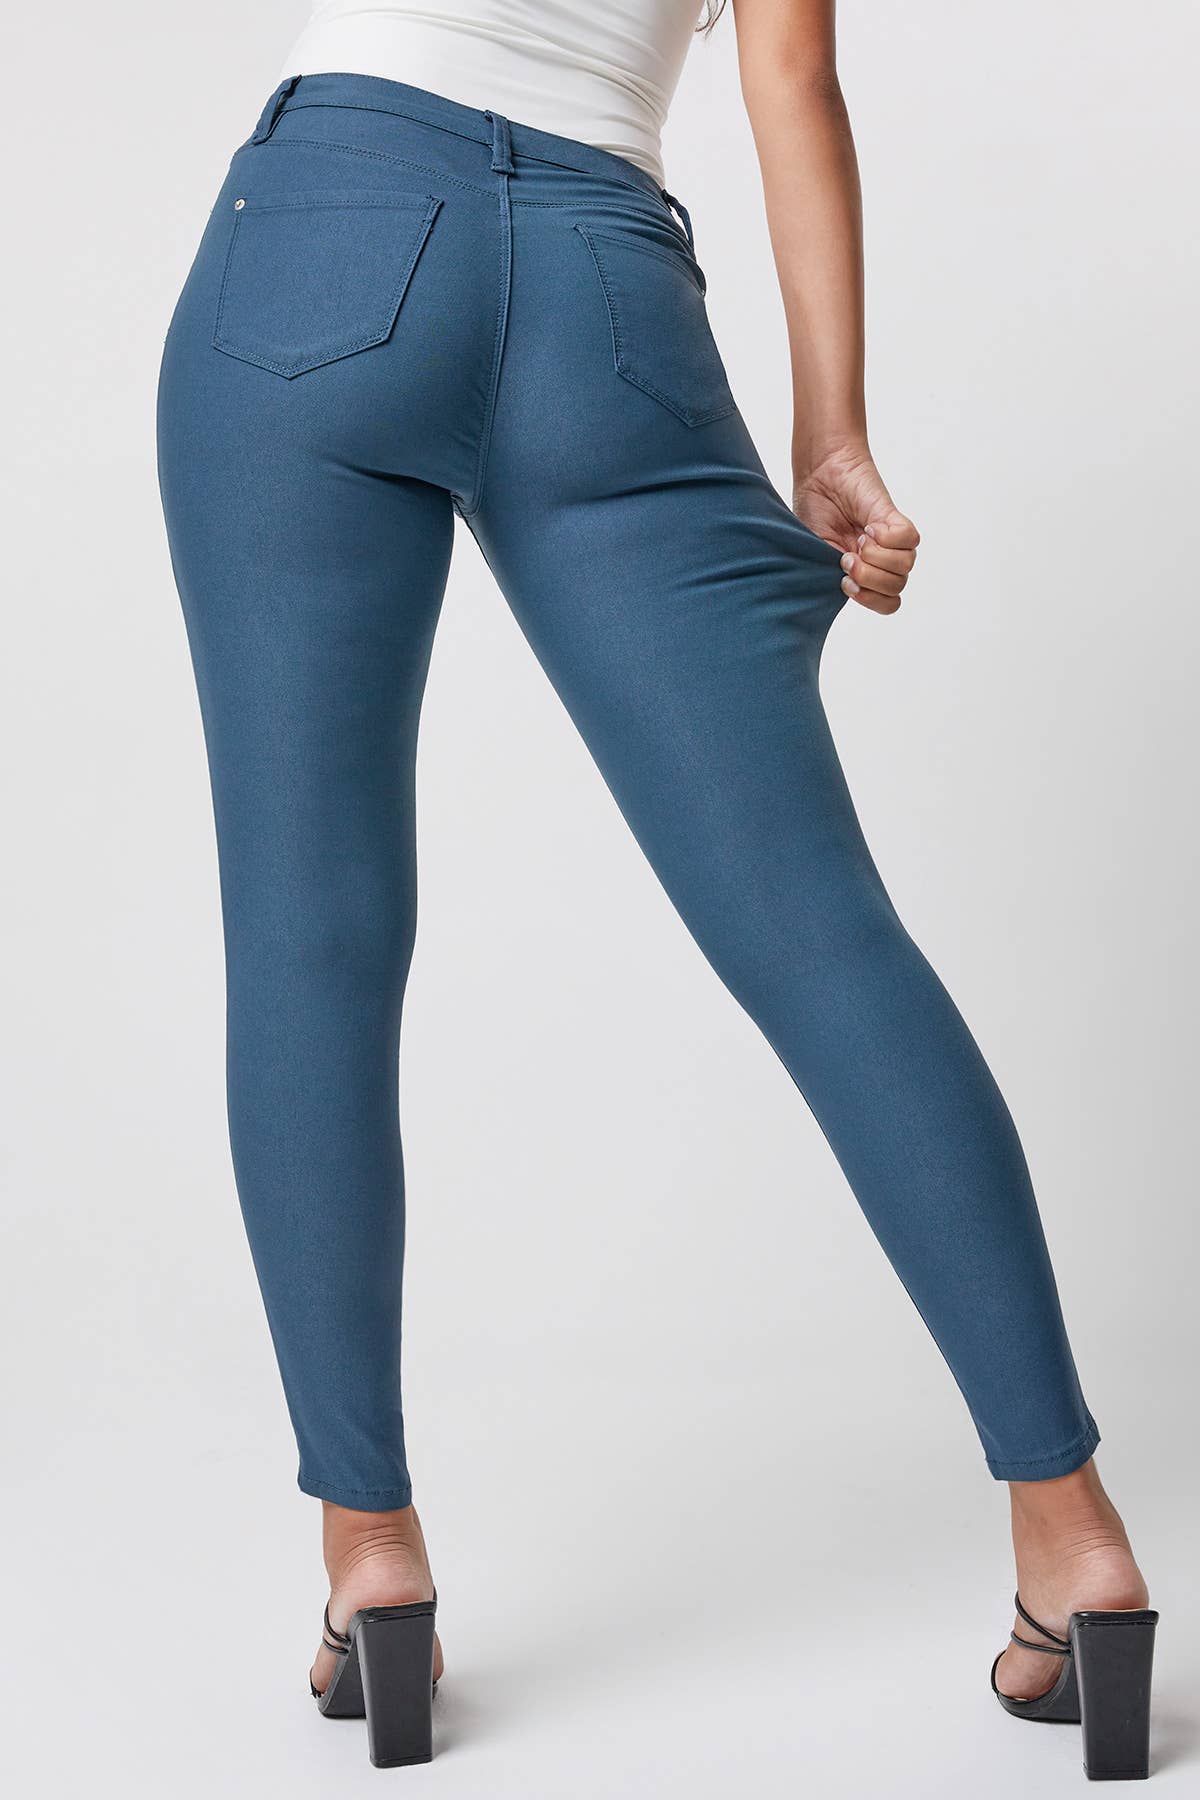 Junior Hyperstretch Mid-Rise Skinny Jean: Large / BLSTL-Blue STeel